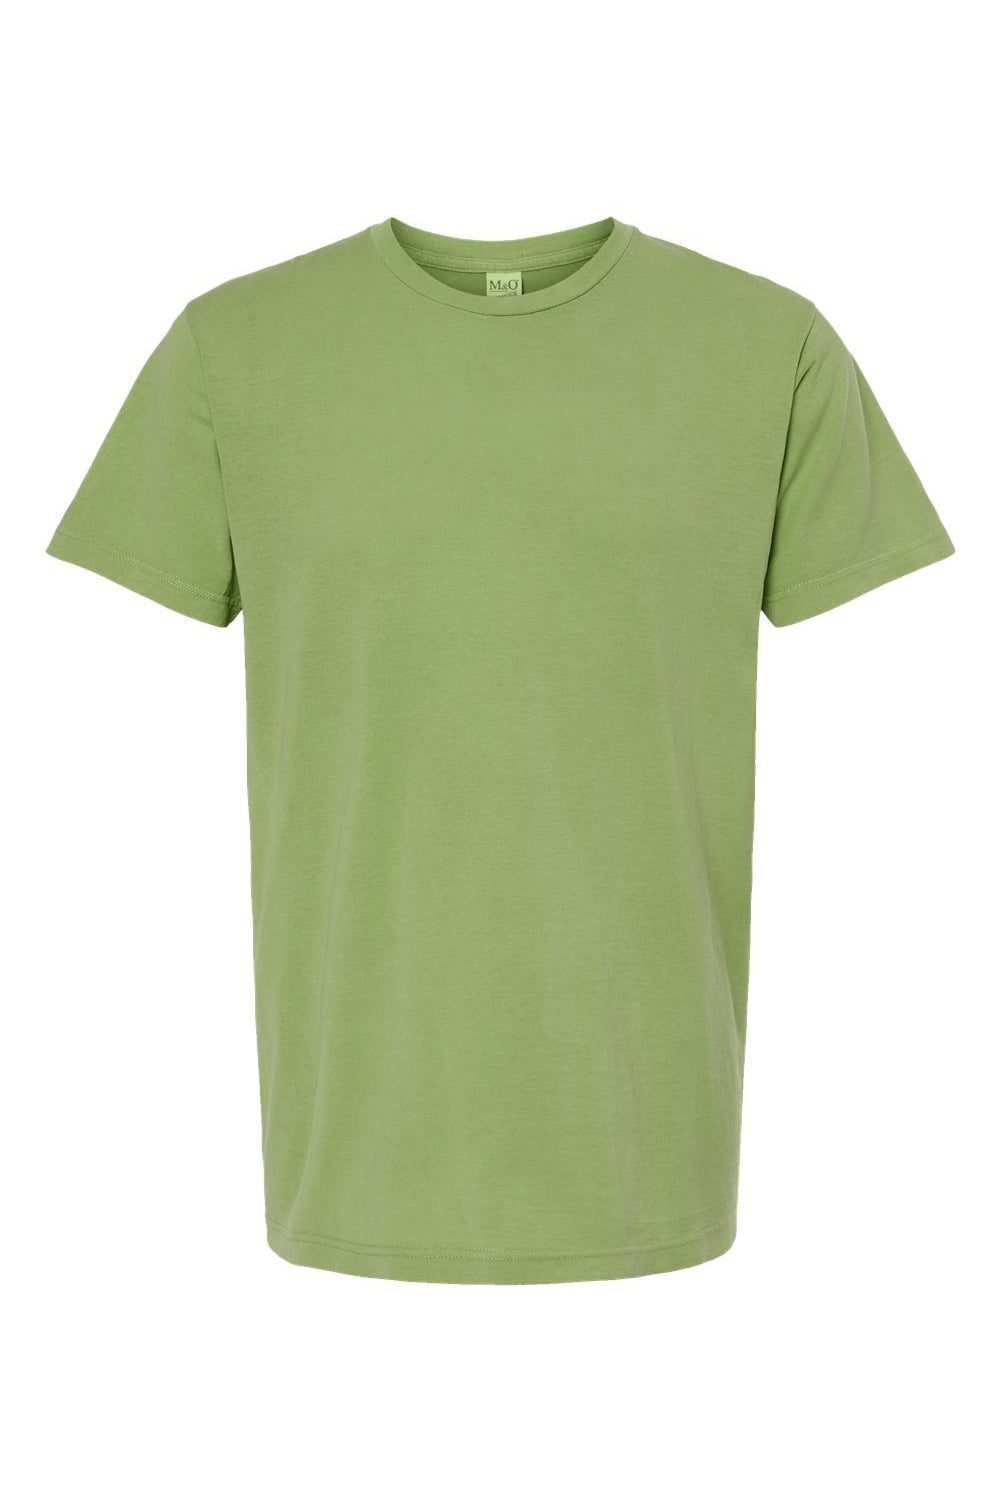 M&O 6500M Mens Vintage Garment Dyed Short Sleeve Crewneck T-Shirt Aloe Green Flat Front